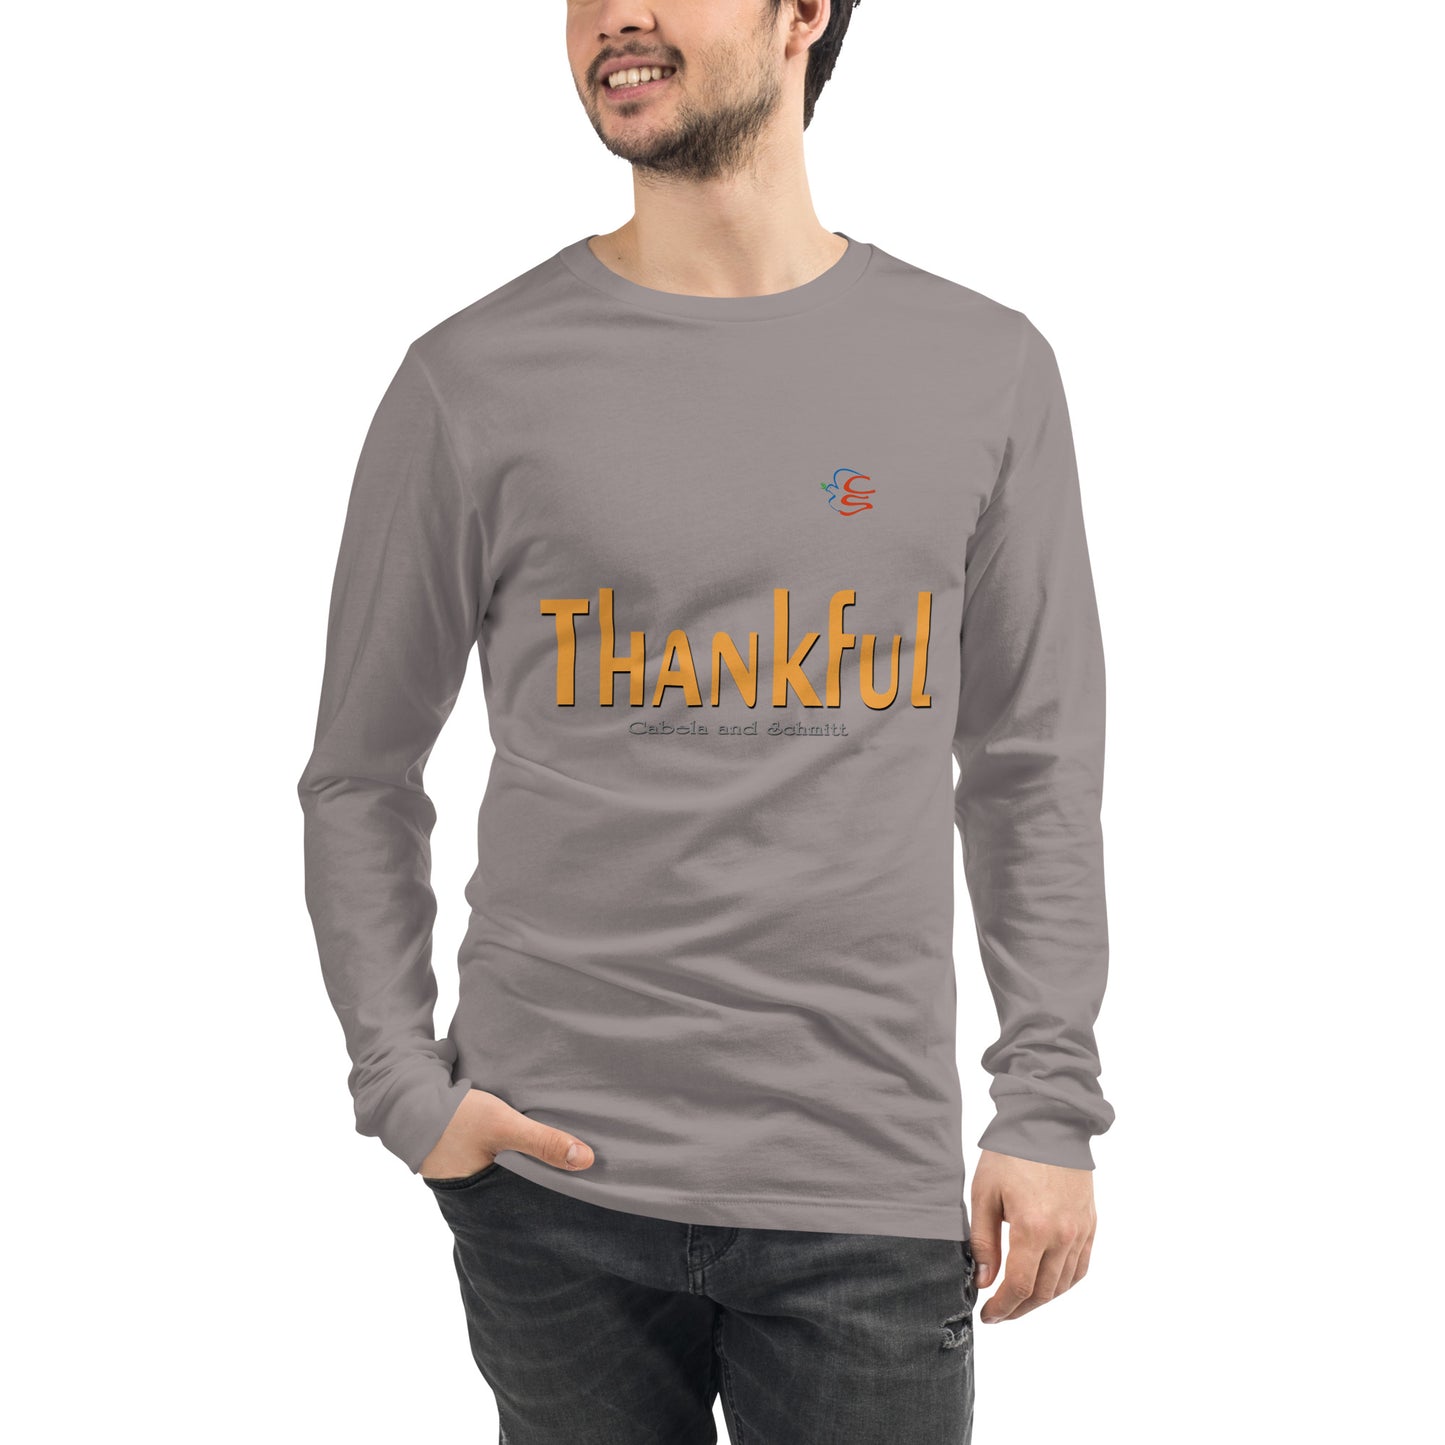 Unisex Long Sleeve Tee "Thankful"